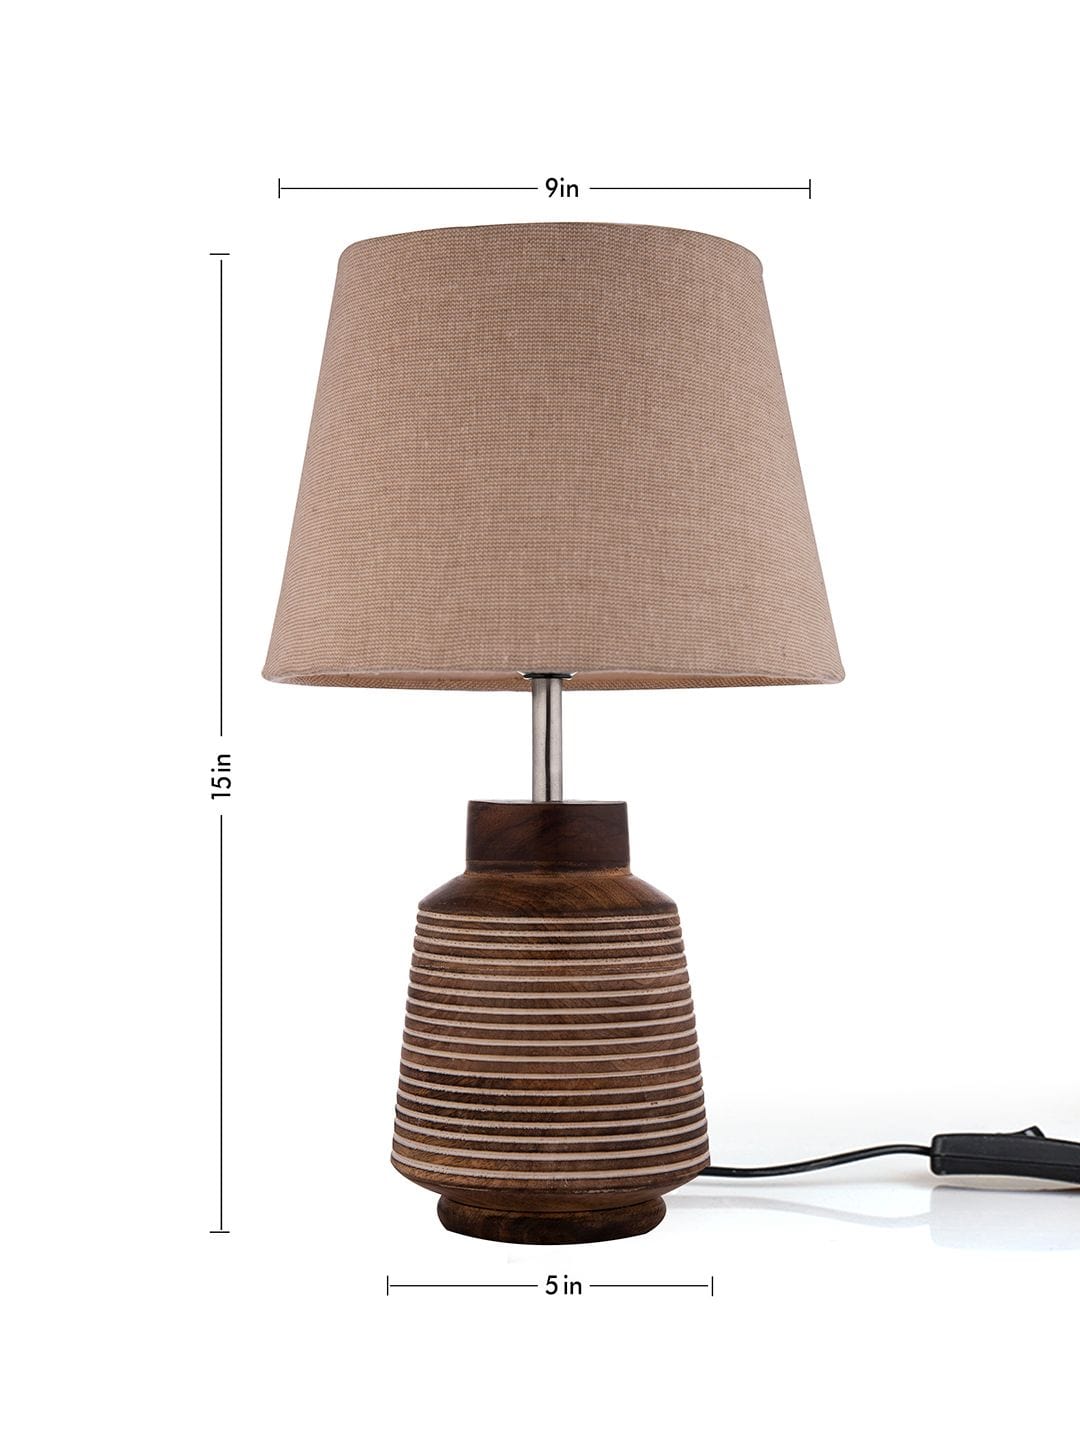 Rustic Ridged Wooden Lamp with Samre Brown Shade